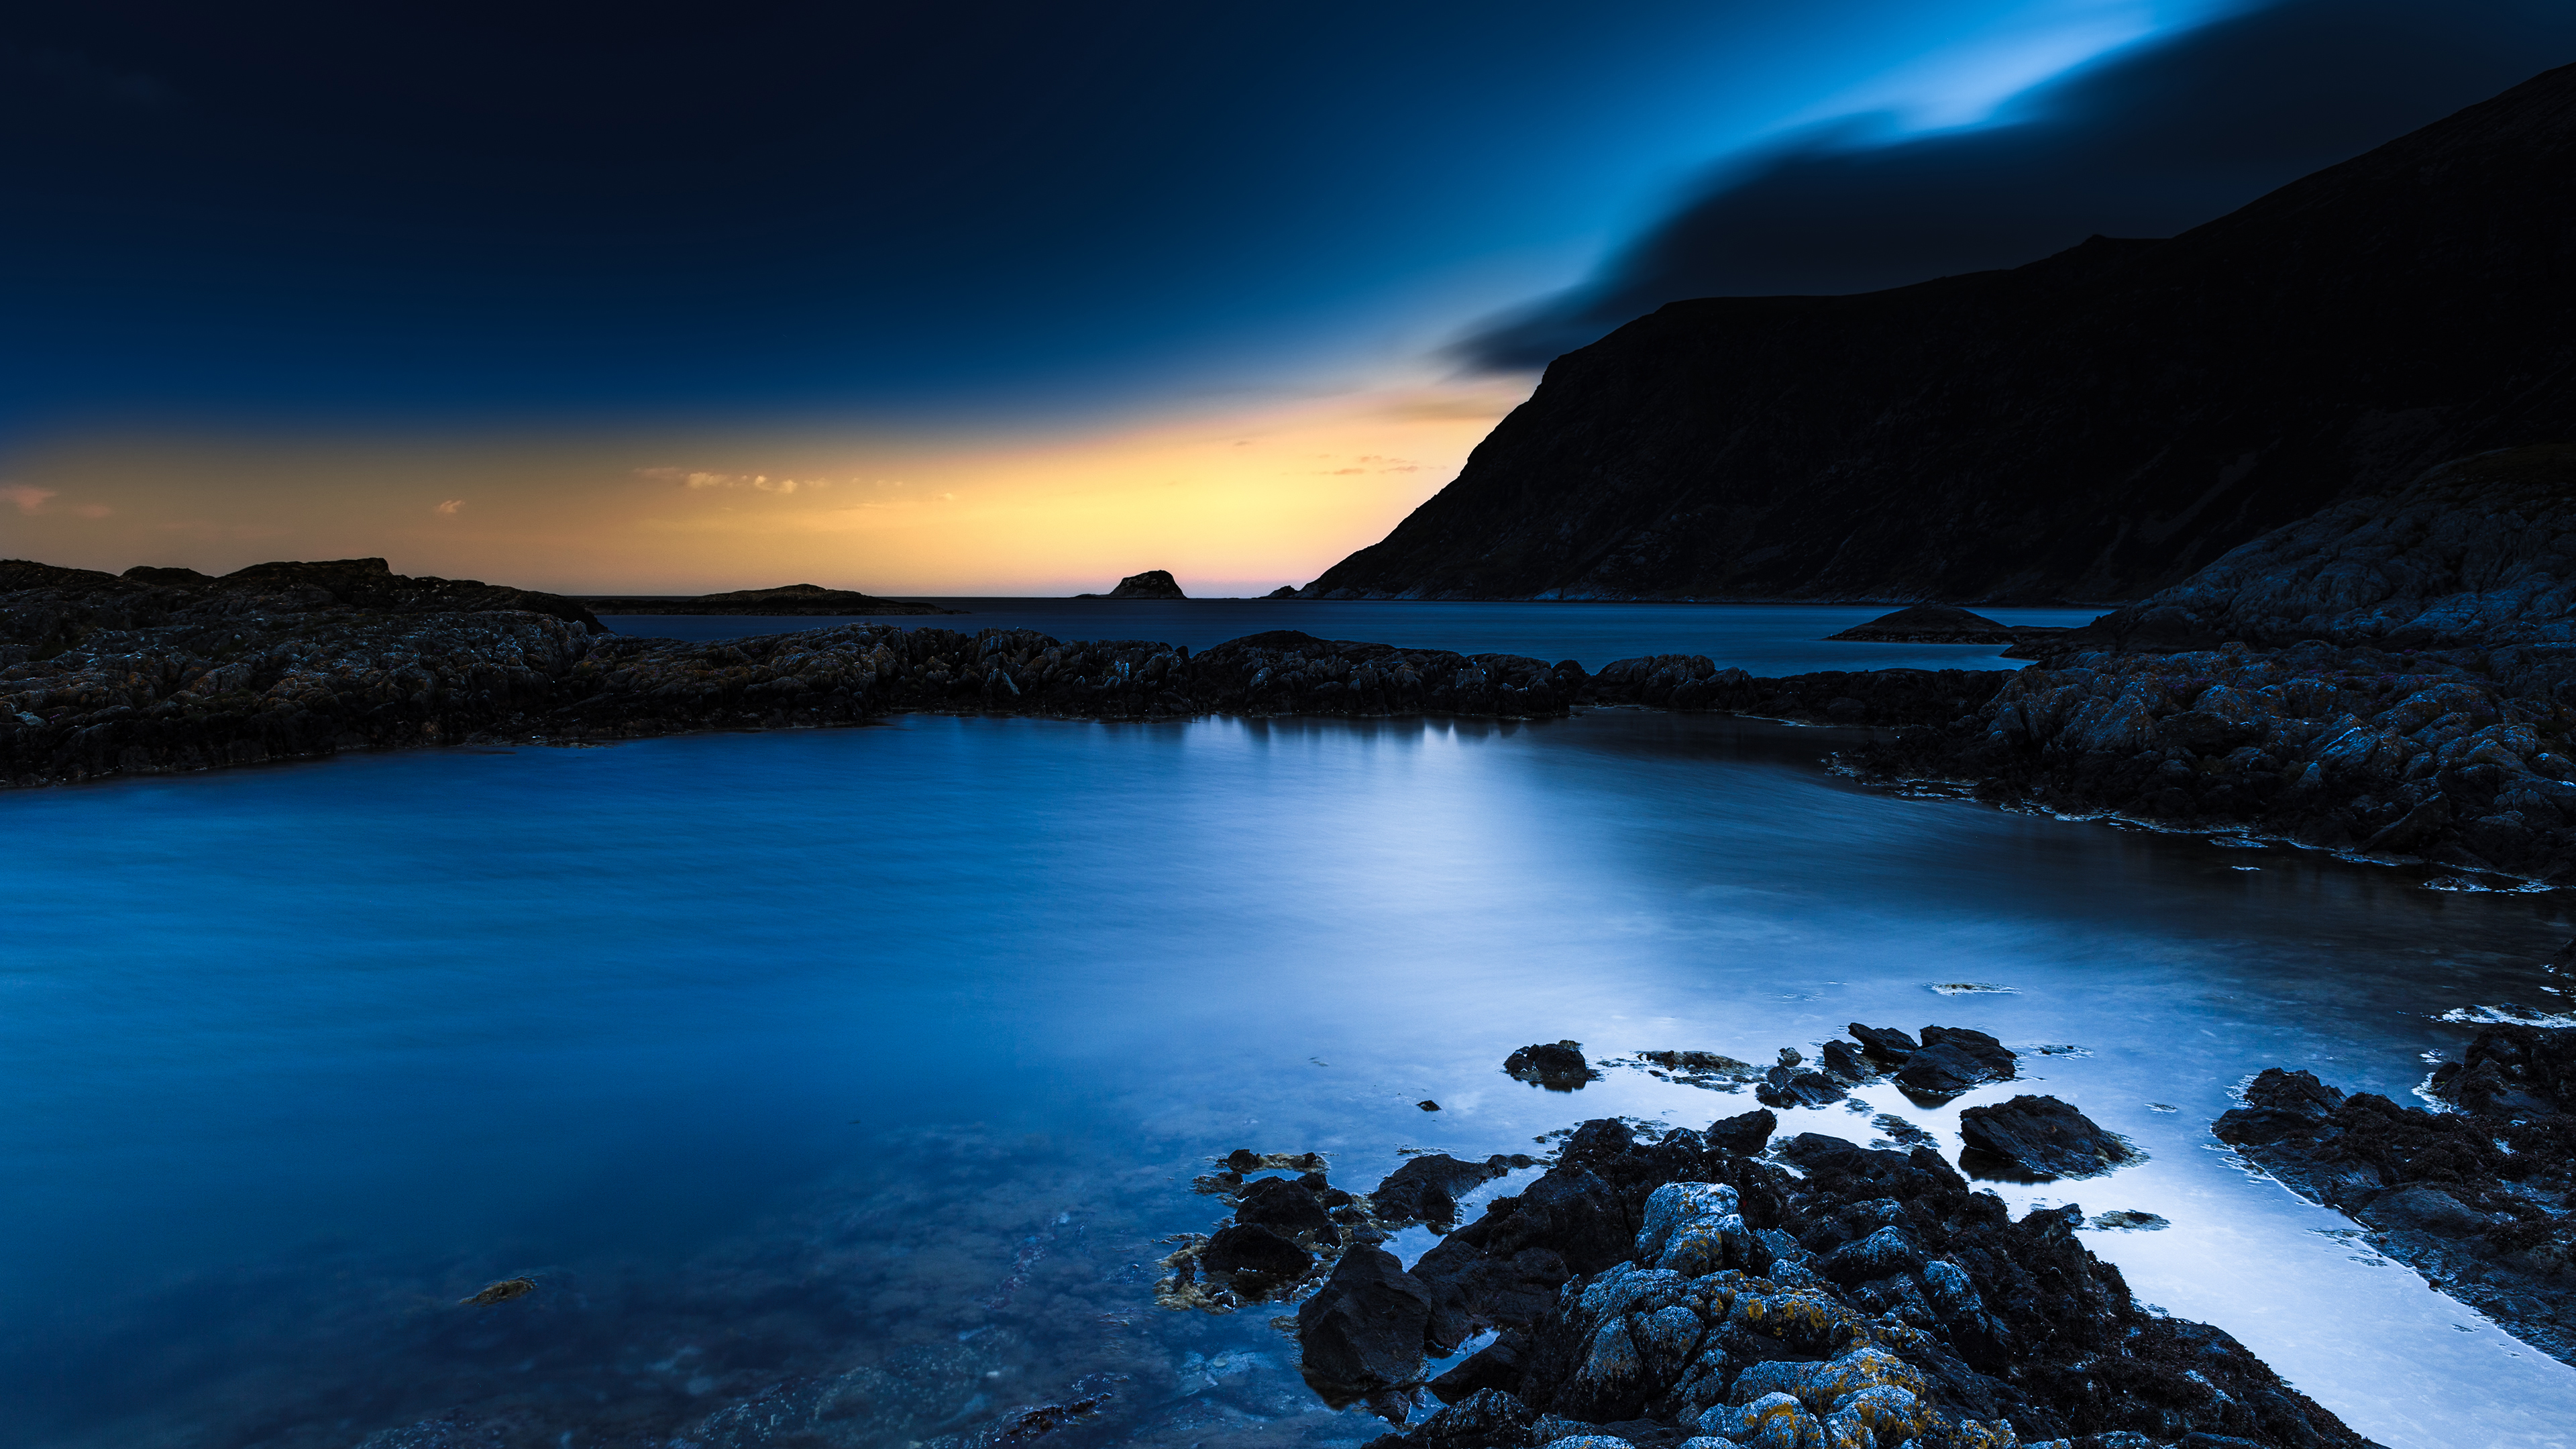 Deep Blue Lake At Night 4k Ultra Hd Wallpaper Background Image